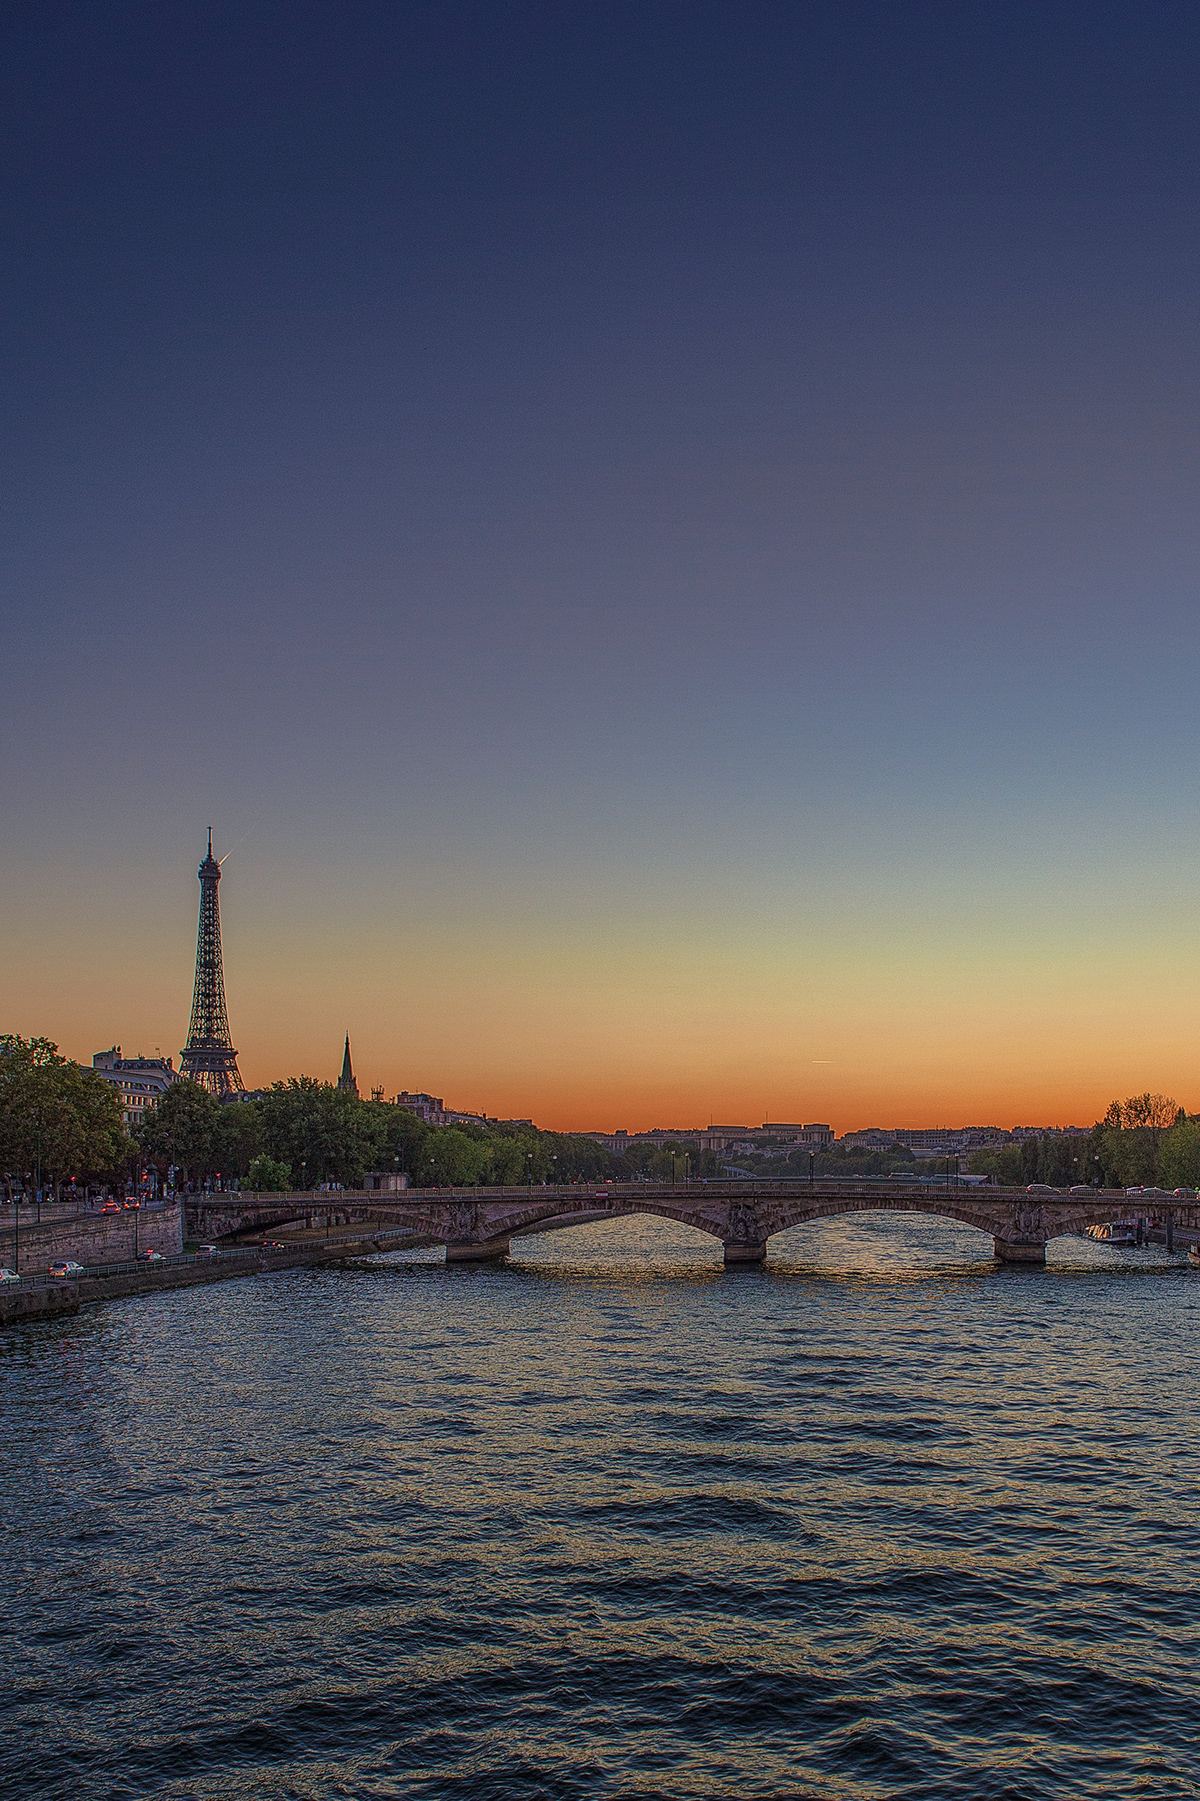 sunset Paris st petersburg White Nights